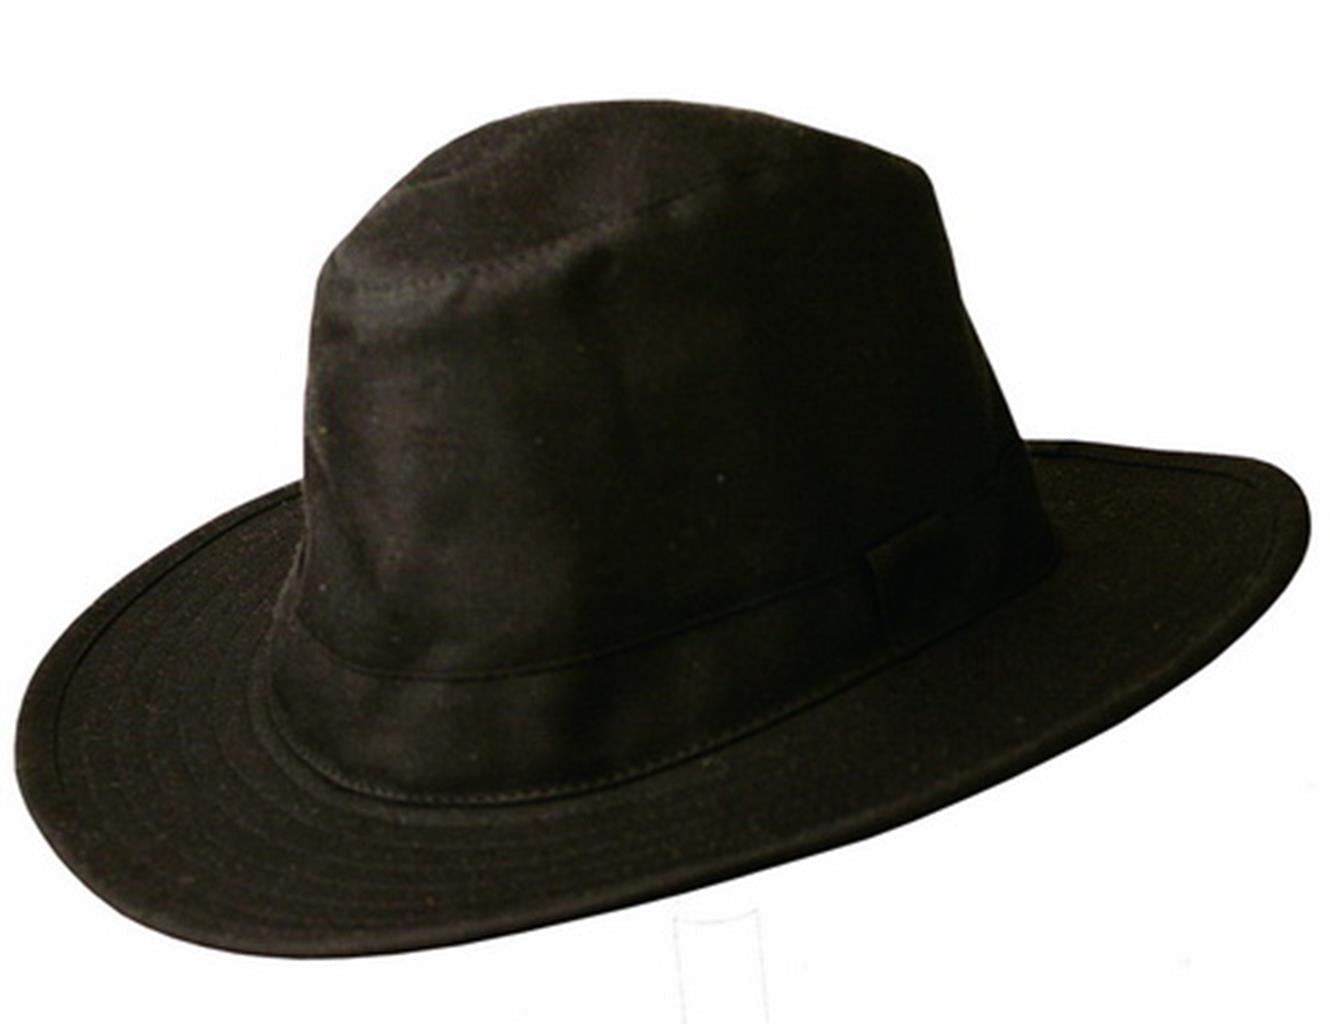 Rosebank Bucket Hat